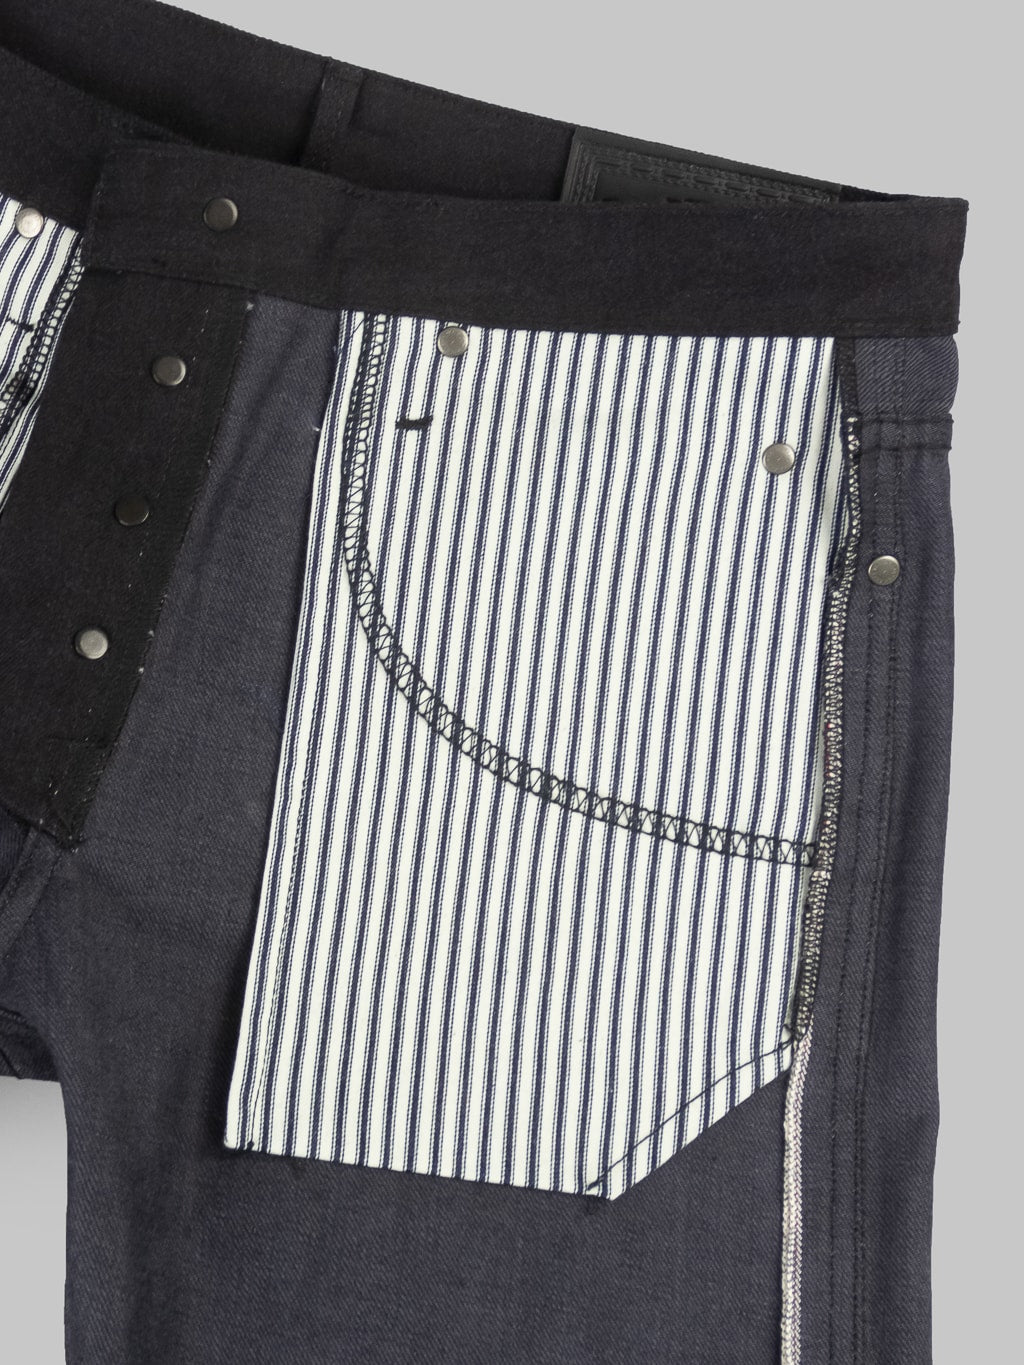 Freenote Cloth Rios Black Grey Japanese Denim Slim Straight Jeans interior fabric 